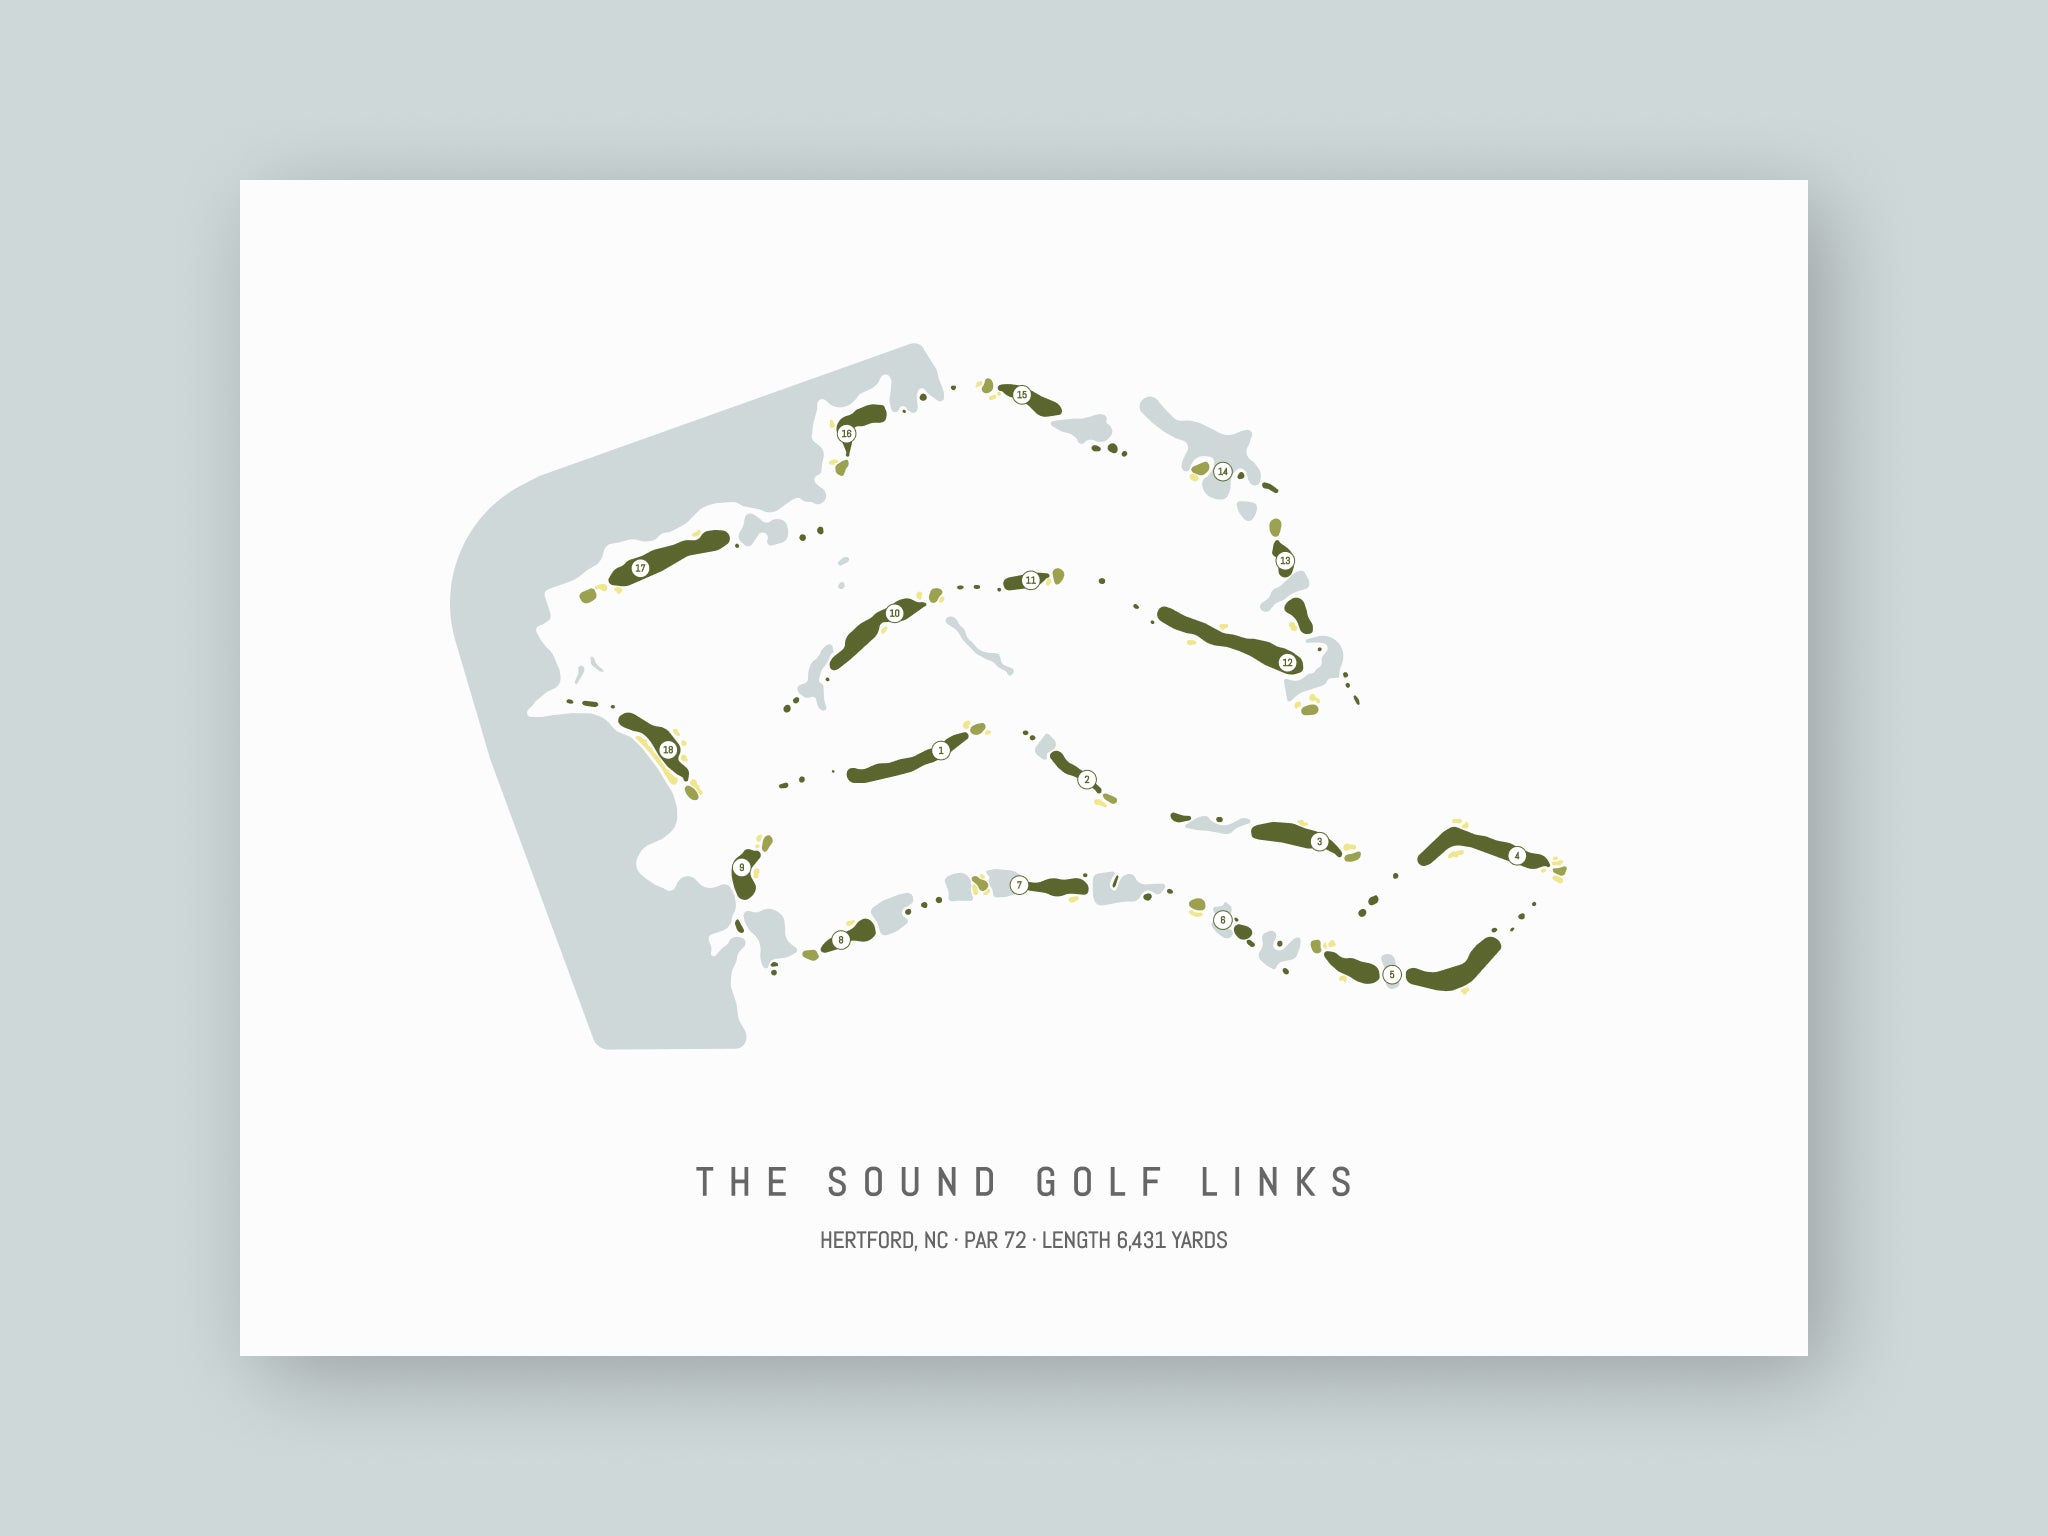 The Sound Golf Links